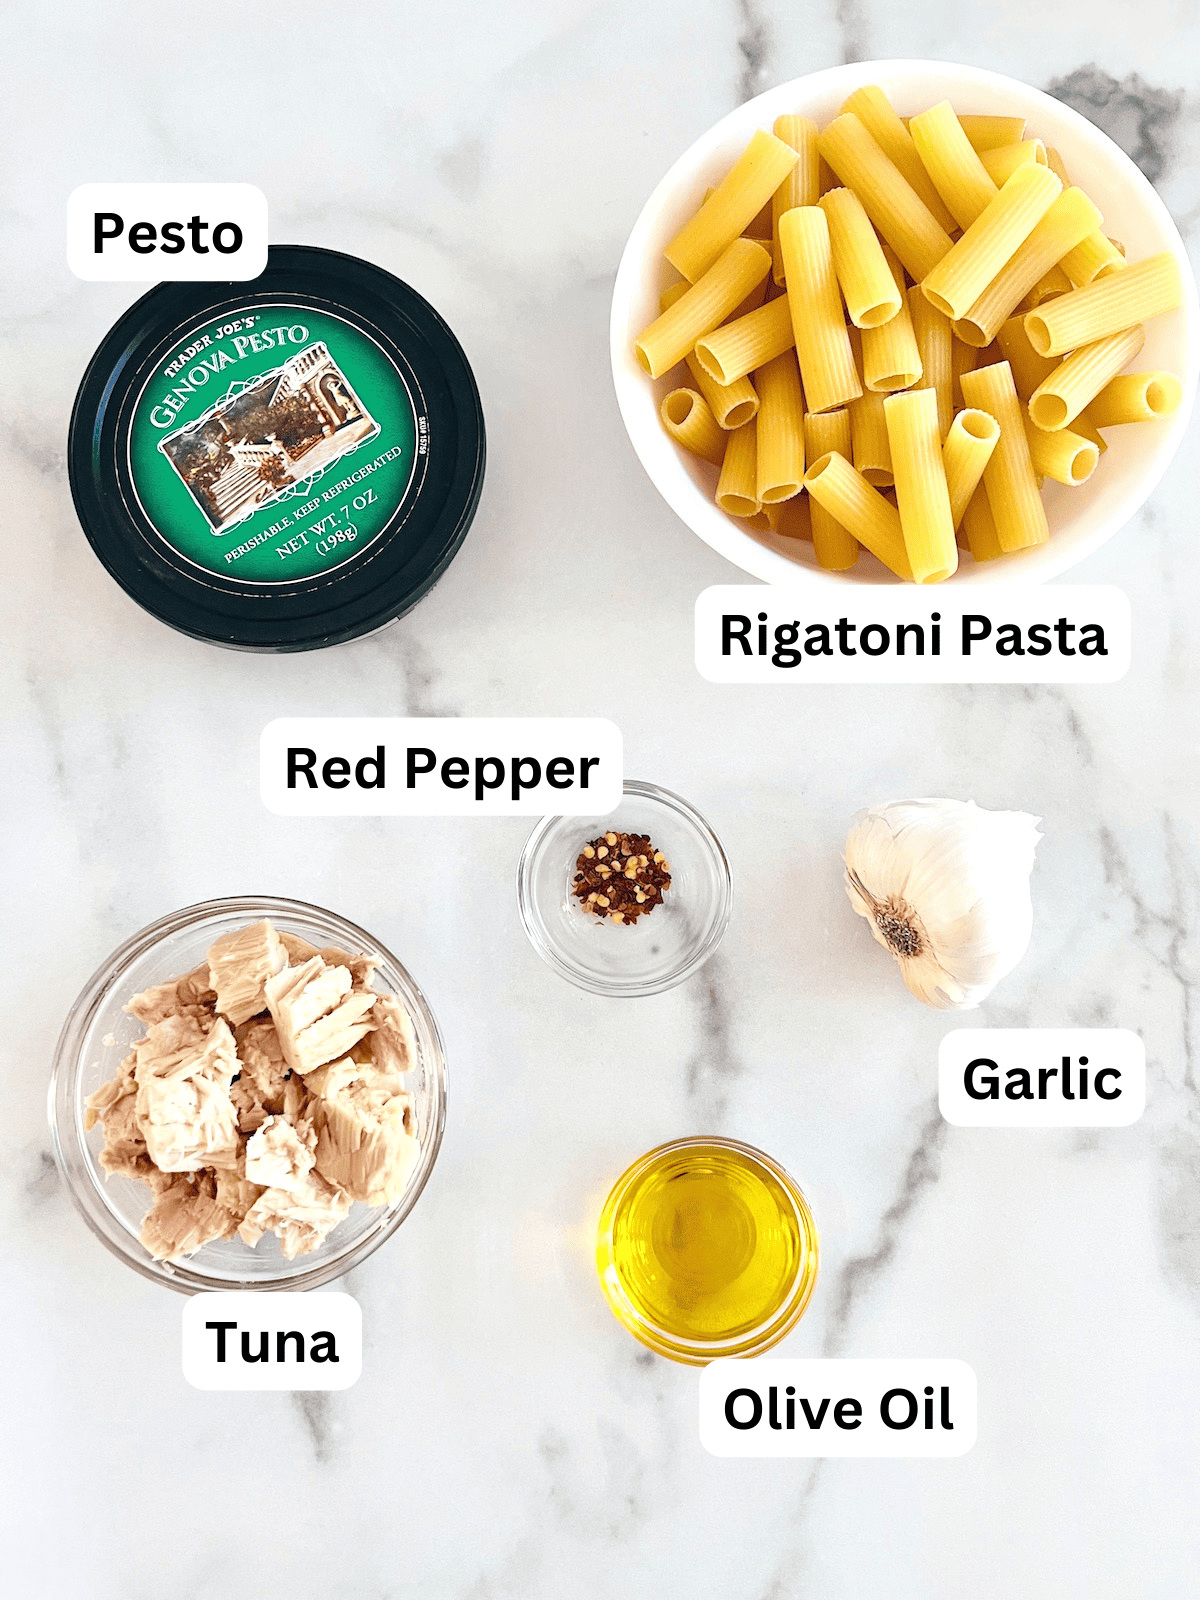 Pesto Tuna Pasta Ingredients Labeled.